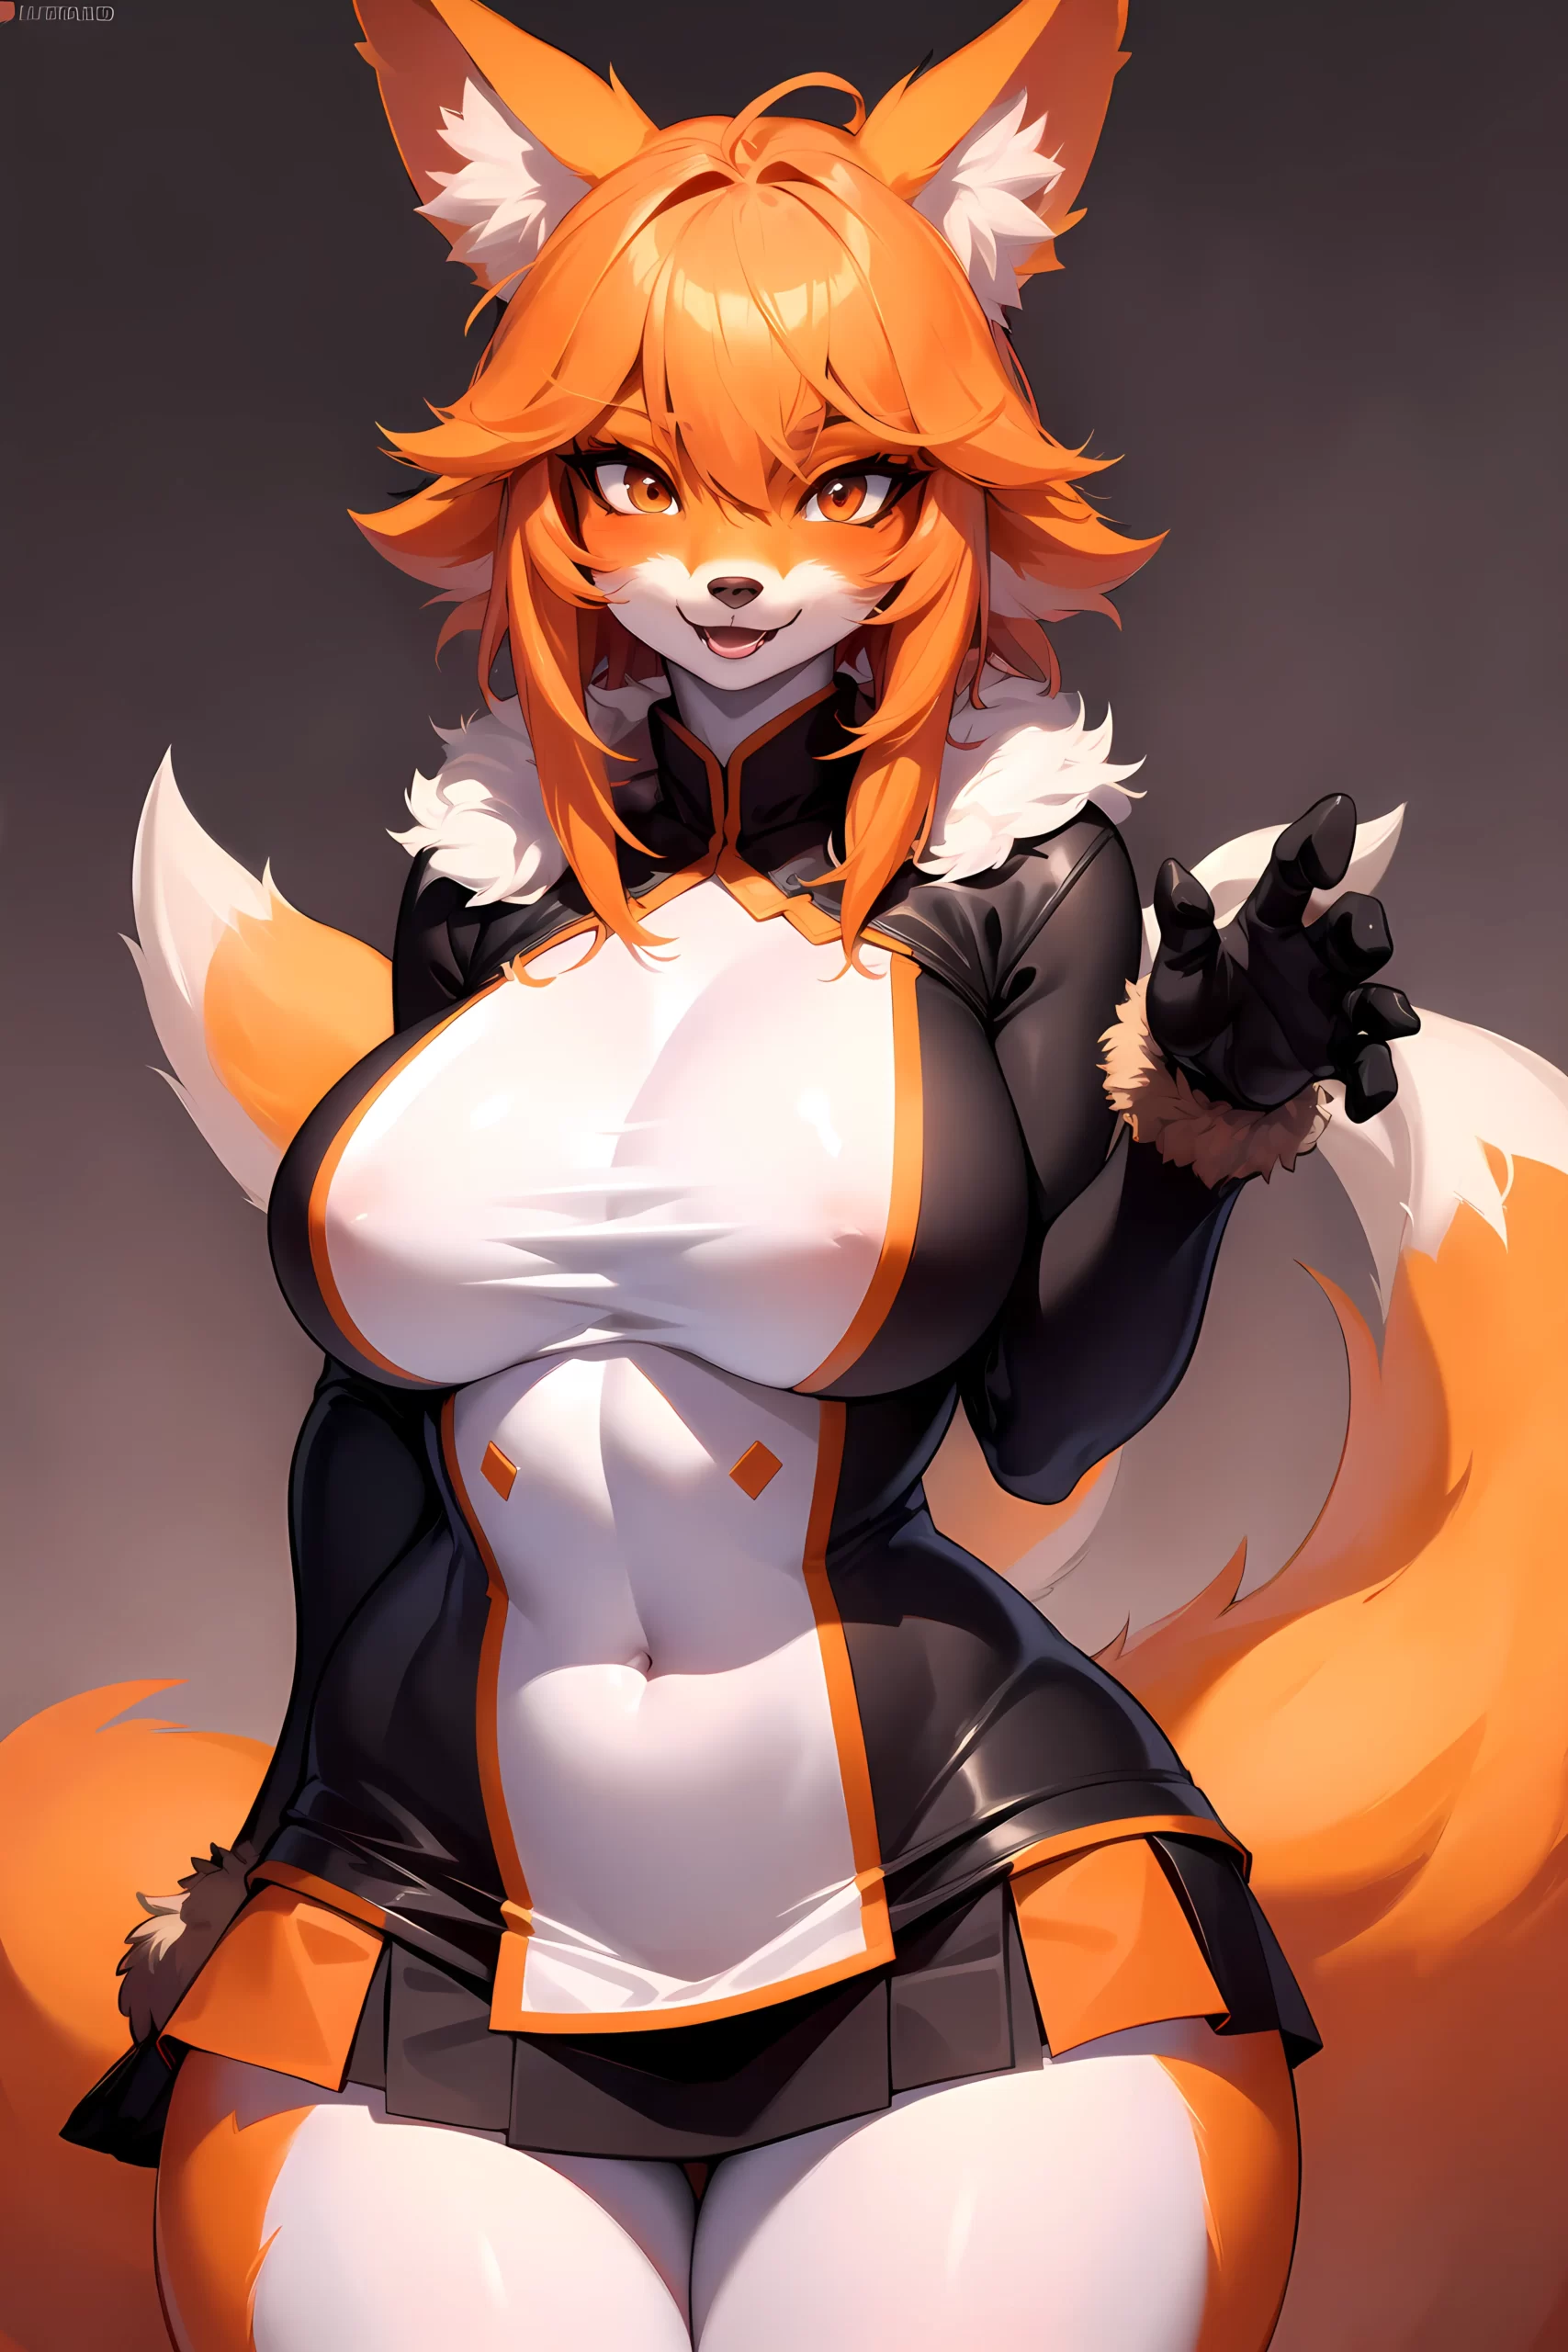 Example 3: Furry Fox Wearing a Short Skirt!